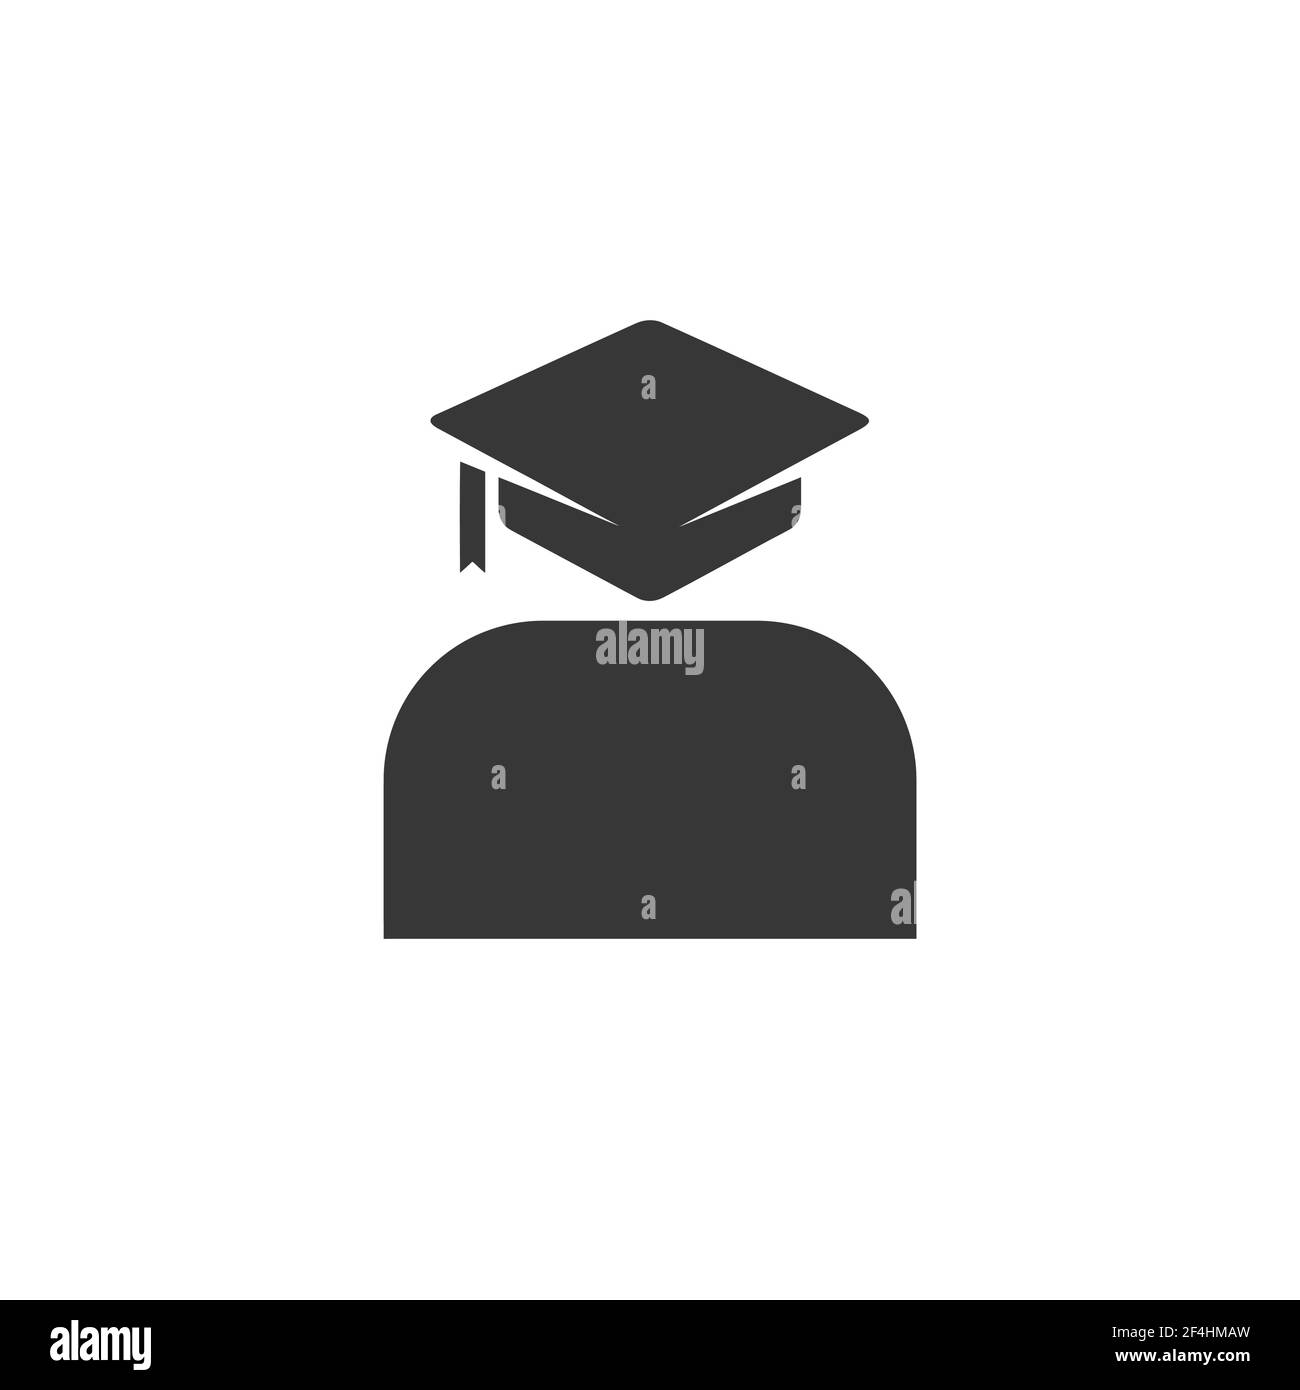 Education logo Black and White Stock Photos & Images - Alamy